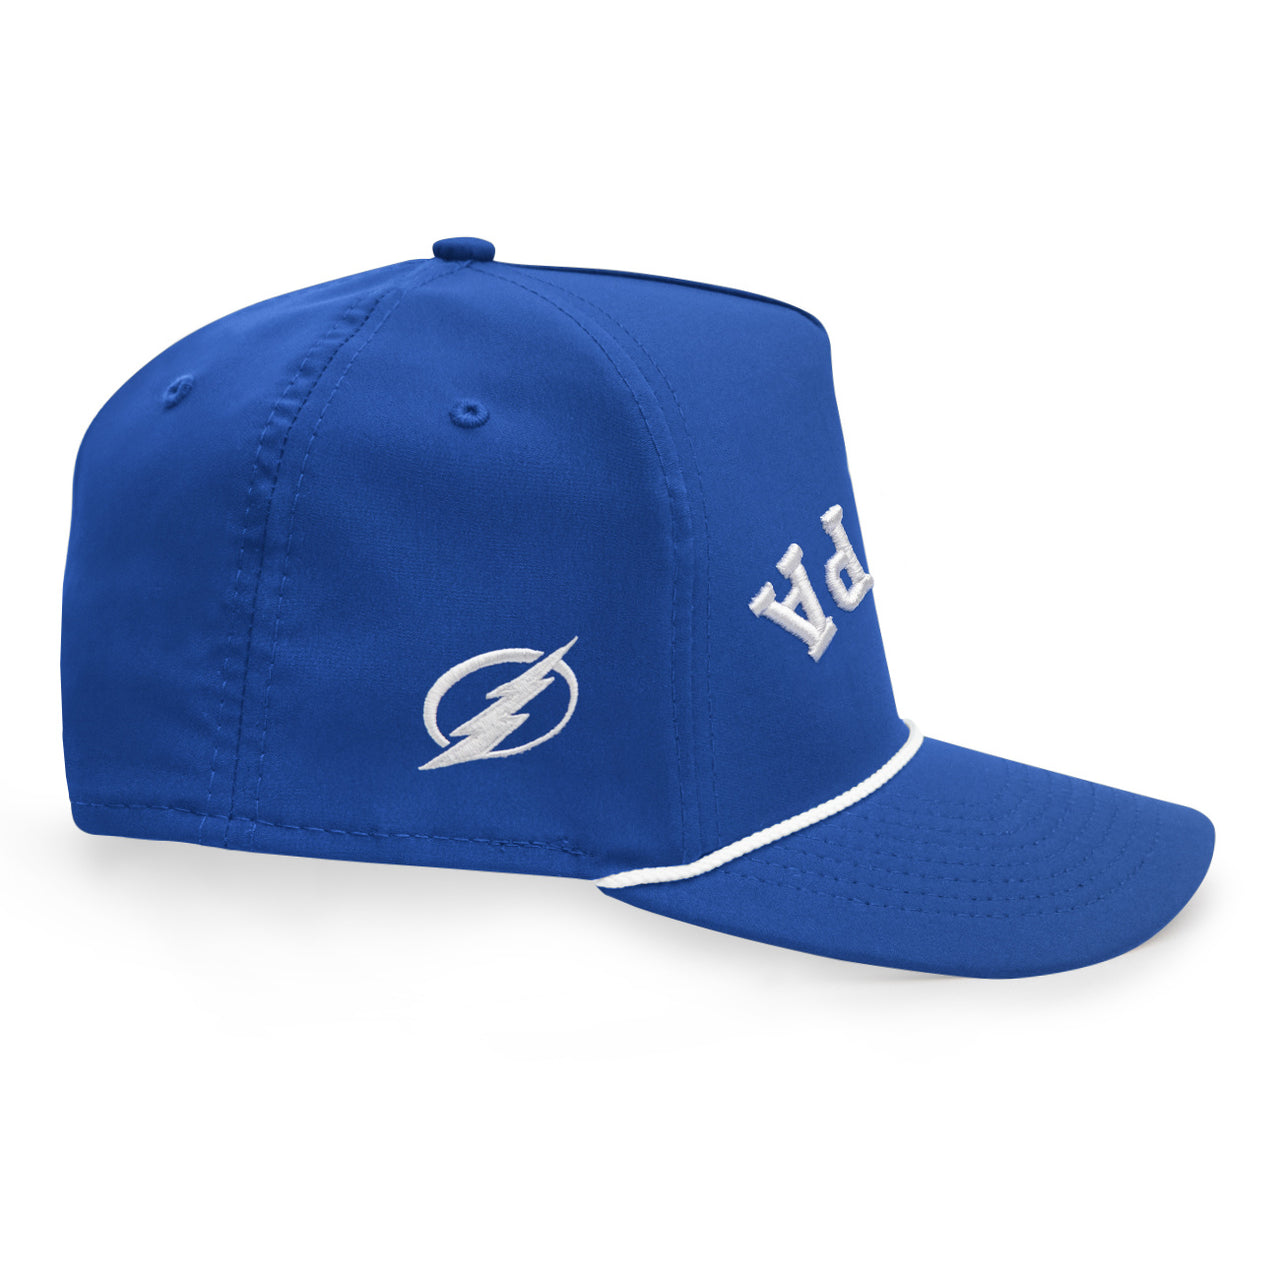 Tampa Bay Lightning Reversed Performance Royal Blue Adjustable Hat